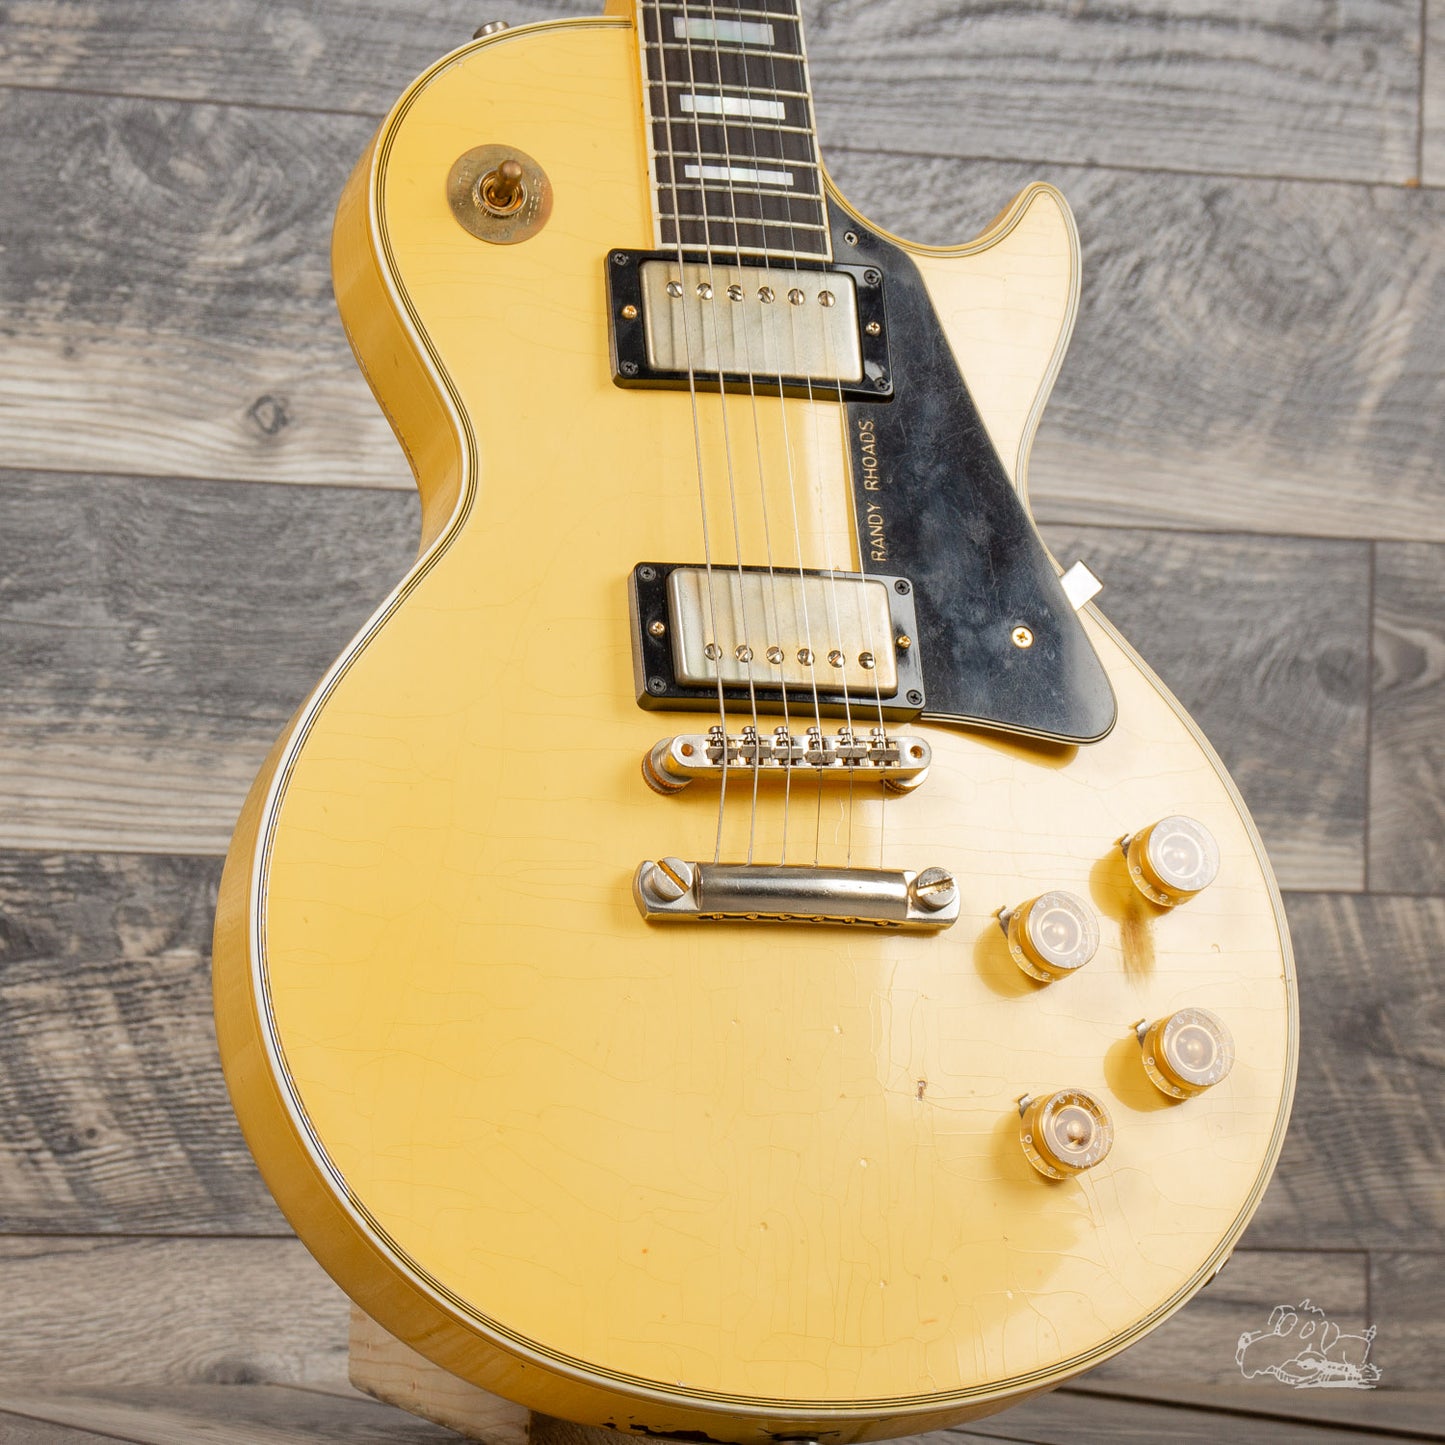 2010 Gibson Custom Shop Randy Rhoads '74 Les Paul Custom Aged